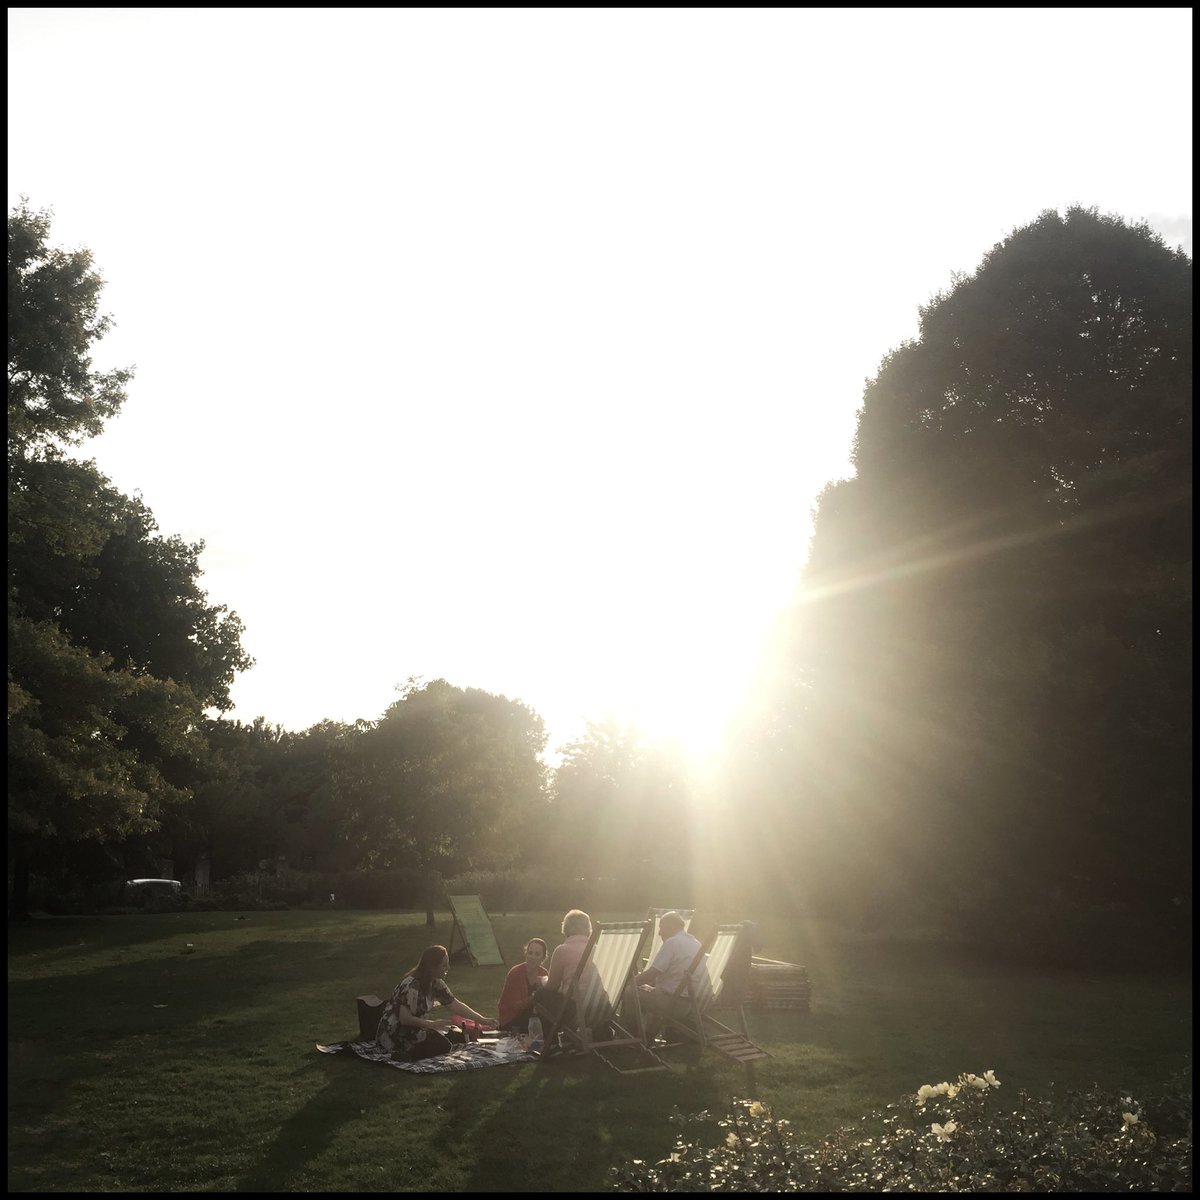 Park.
.
.
.
Photo: @AvilaSimpson / 2018 #uk #london #park #london🇬🇧 #england #queenmarygardens #garden #maquigrafia #alvaroavilasimpson #picnic #treephotography #peoplephotography #iphone #color #shotiniphone #shotoniphone #colorohotography #backlight #everydaylondon